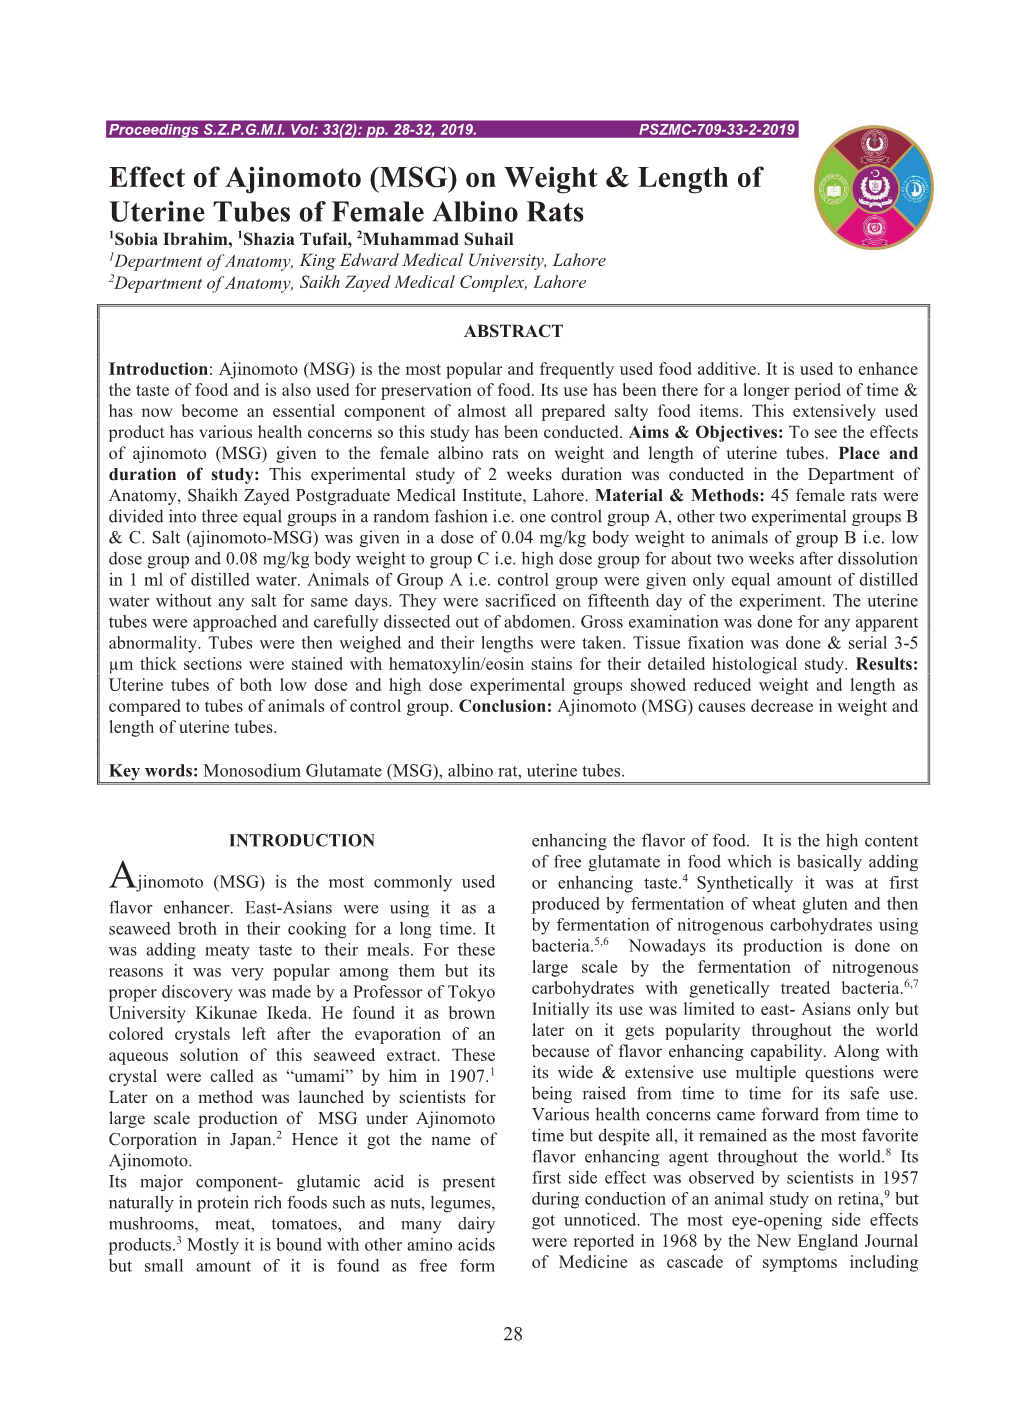 Effect of Ajinomoto (MSG) on Weight & Length of Uterine Tubes of Female